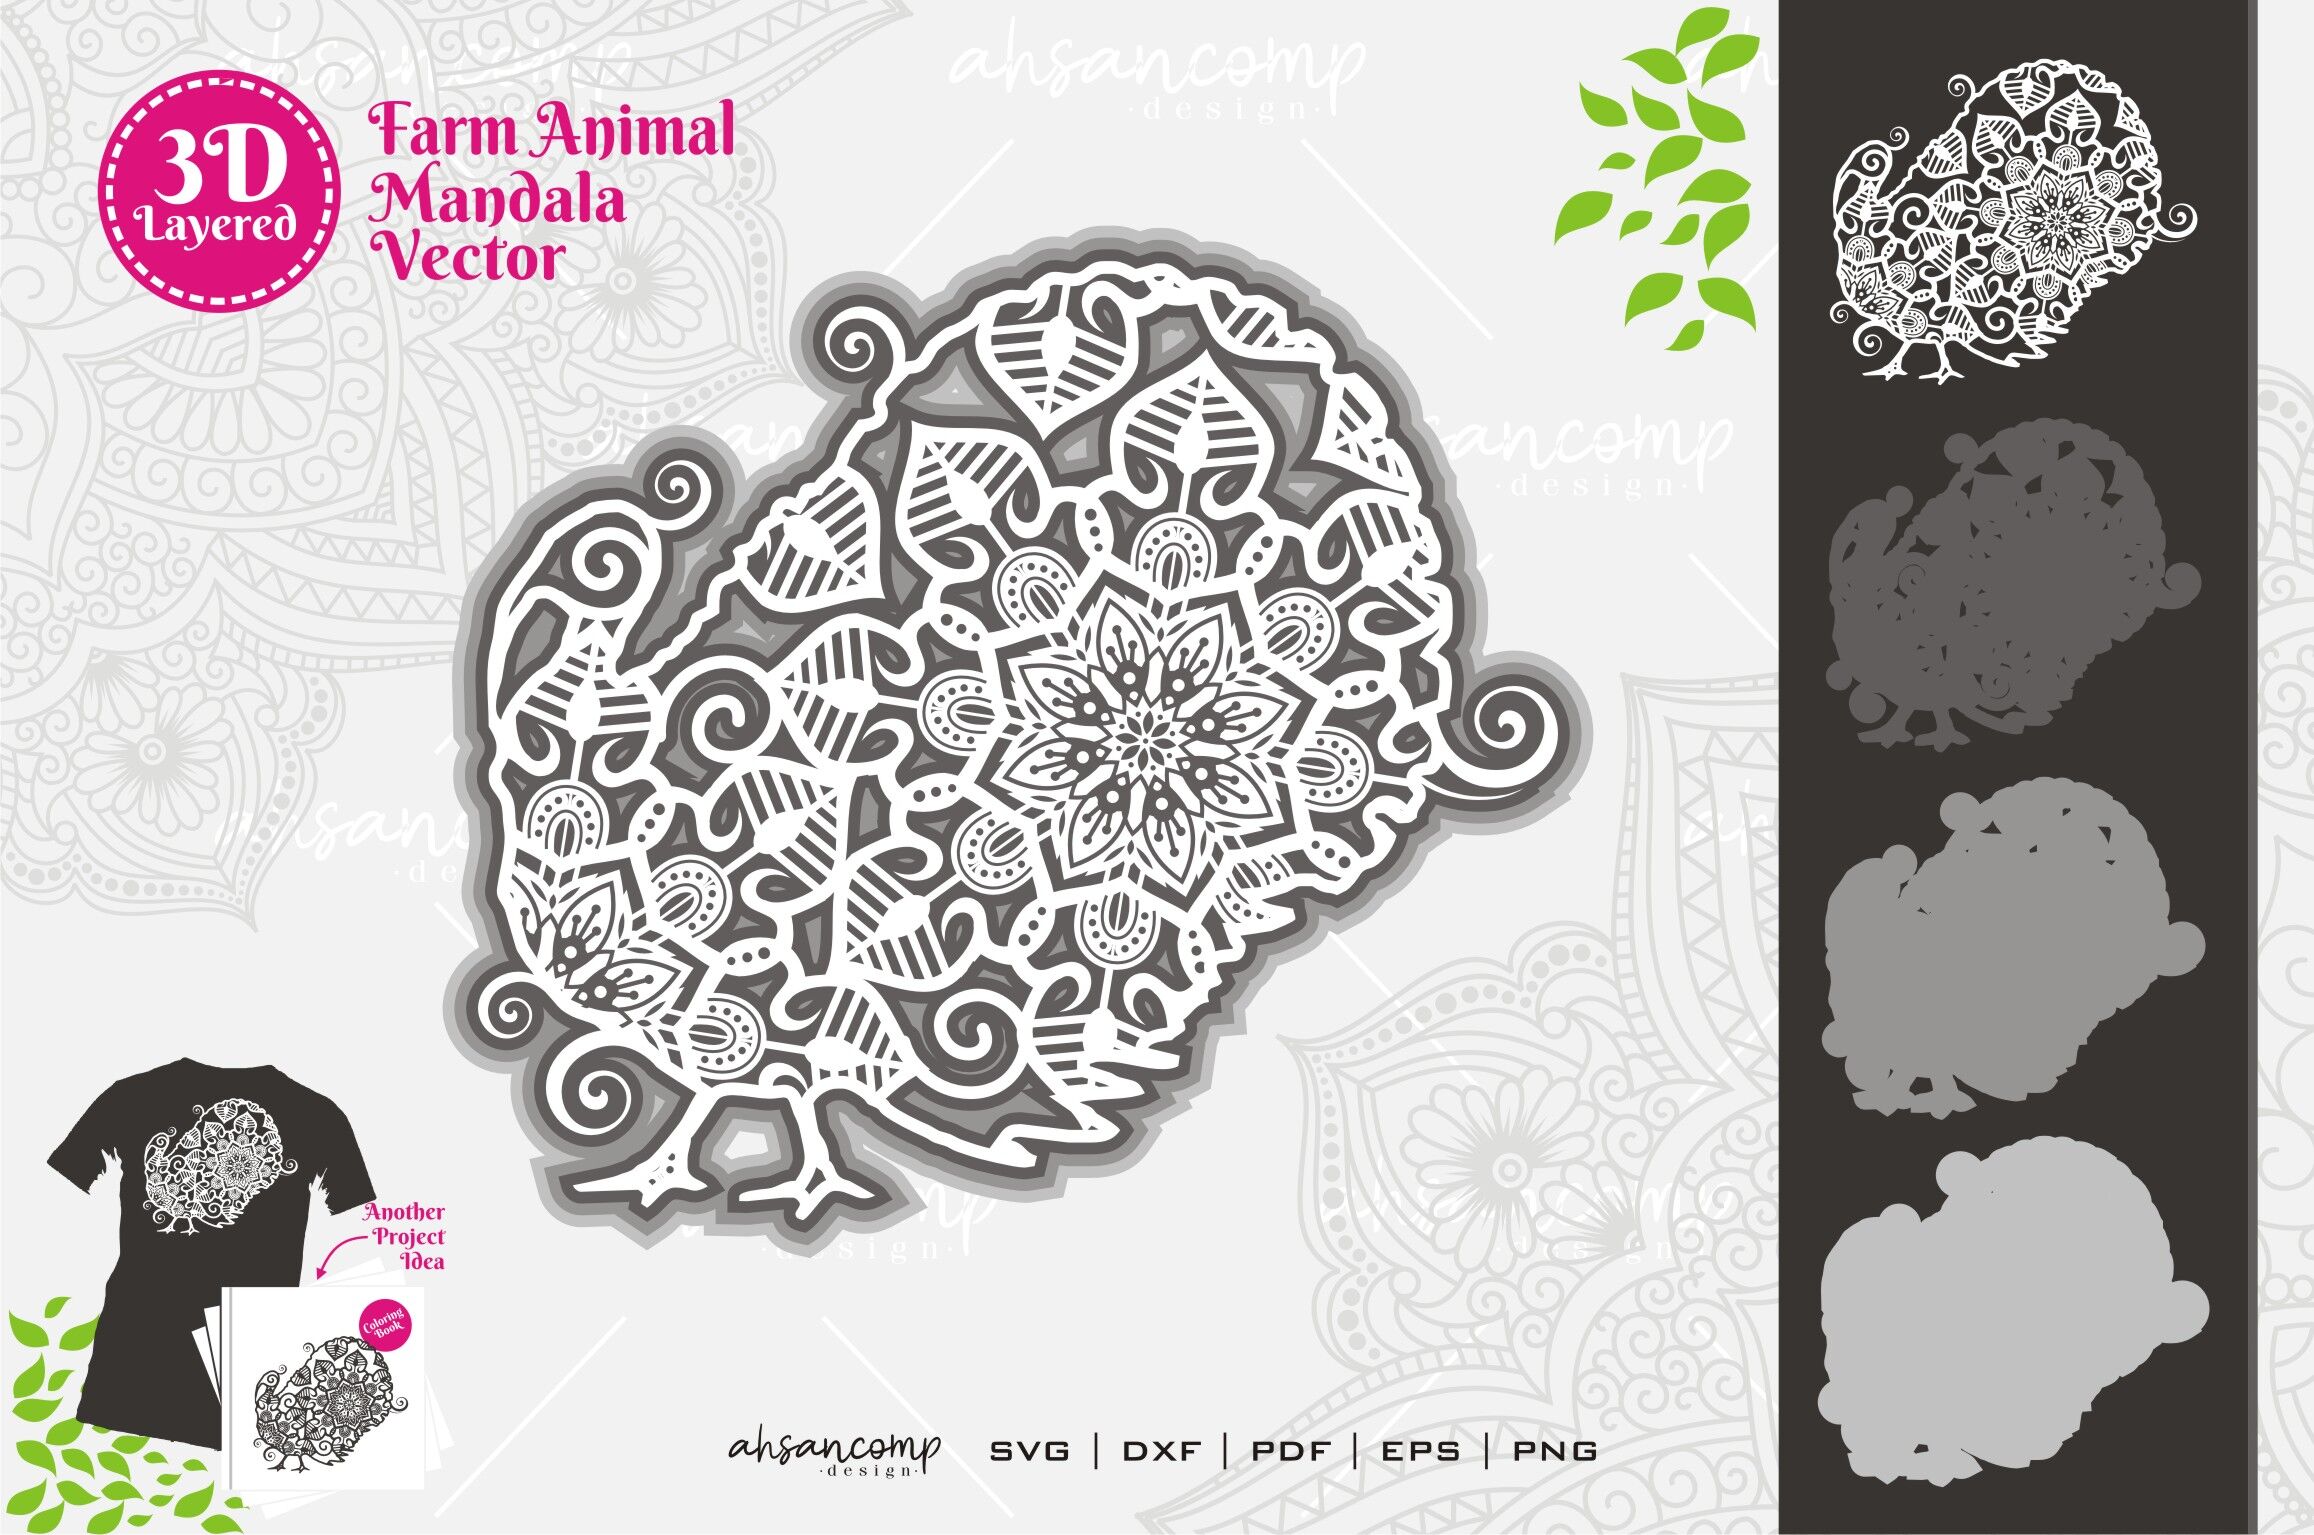 Download Farm Animal Mandala Svg 3d Layered 10 By Ahsancomp Studio Thehungryjpeg Com